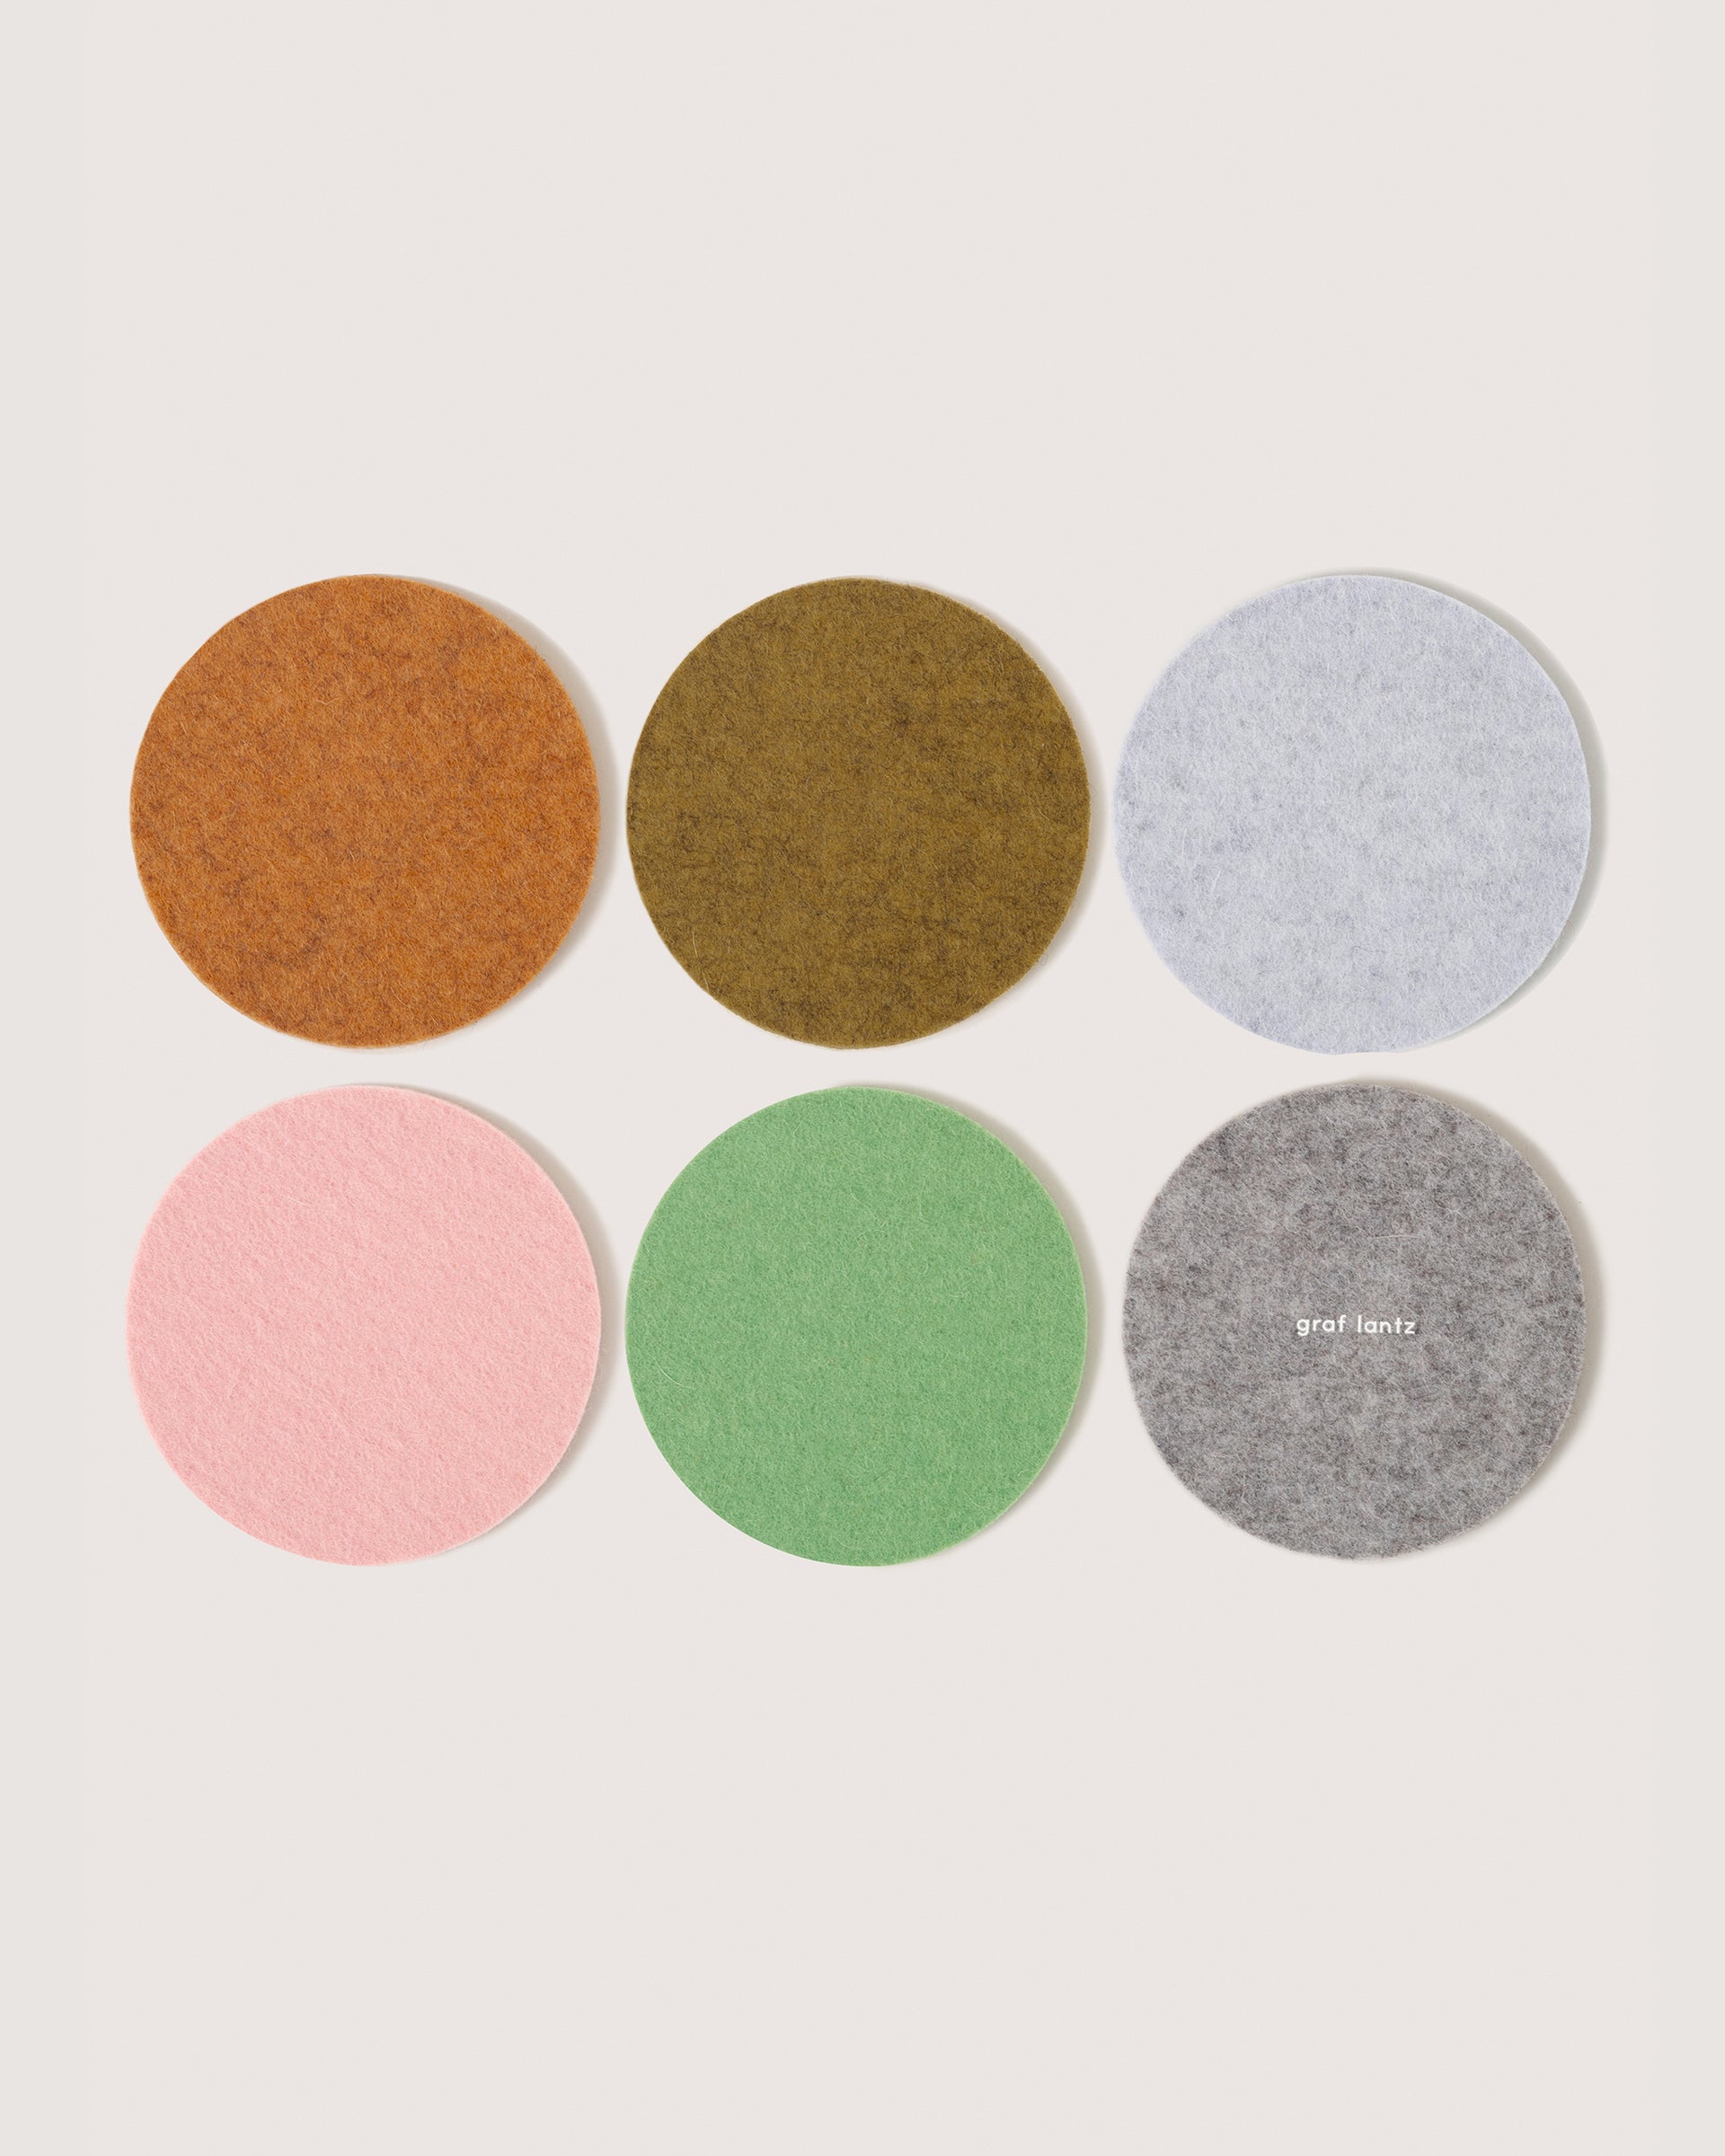 Six round felt coasters in Miso, Matcha, Fog, Ochre, Rock Salt, and Granite colors by Graf Lantz, white background